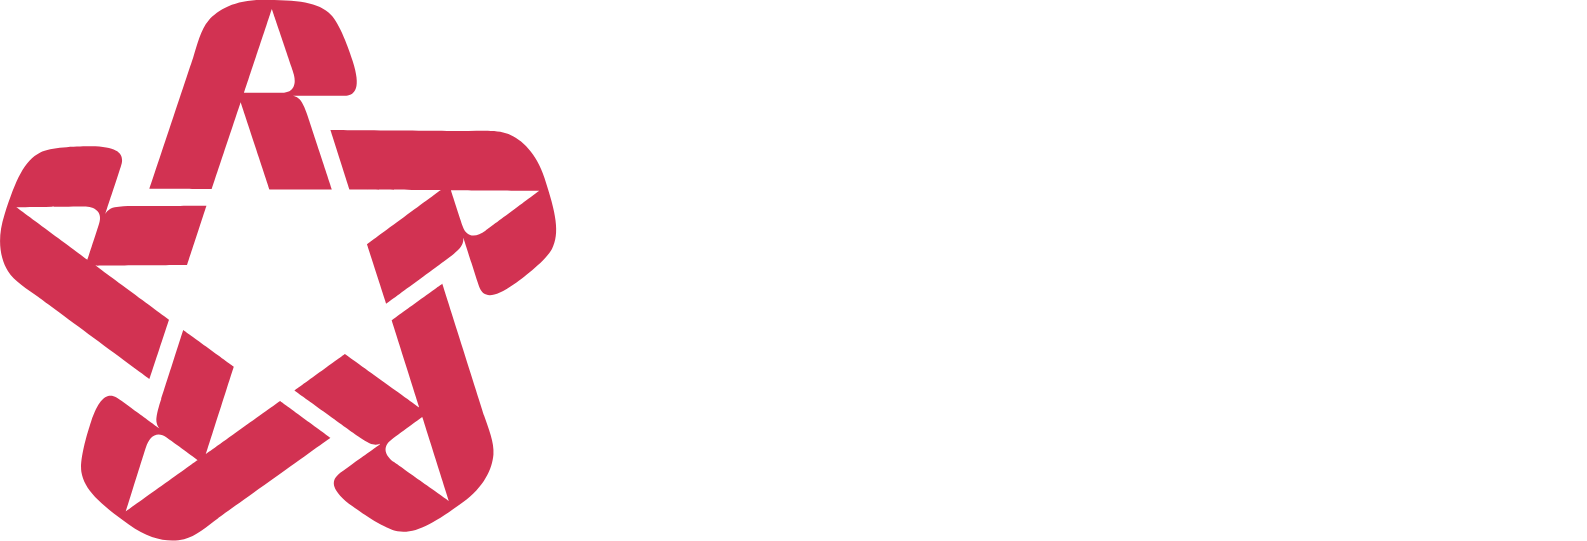 Republic Services
 logo large for dark backgrounds (transparent PNG)